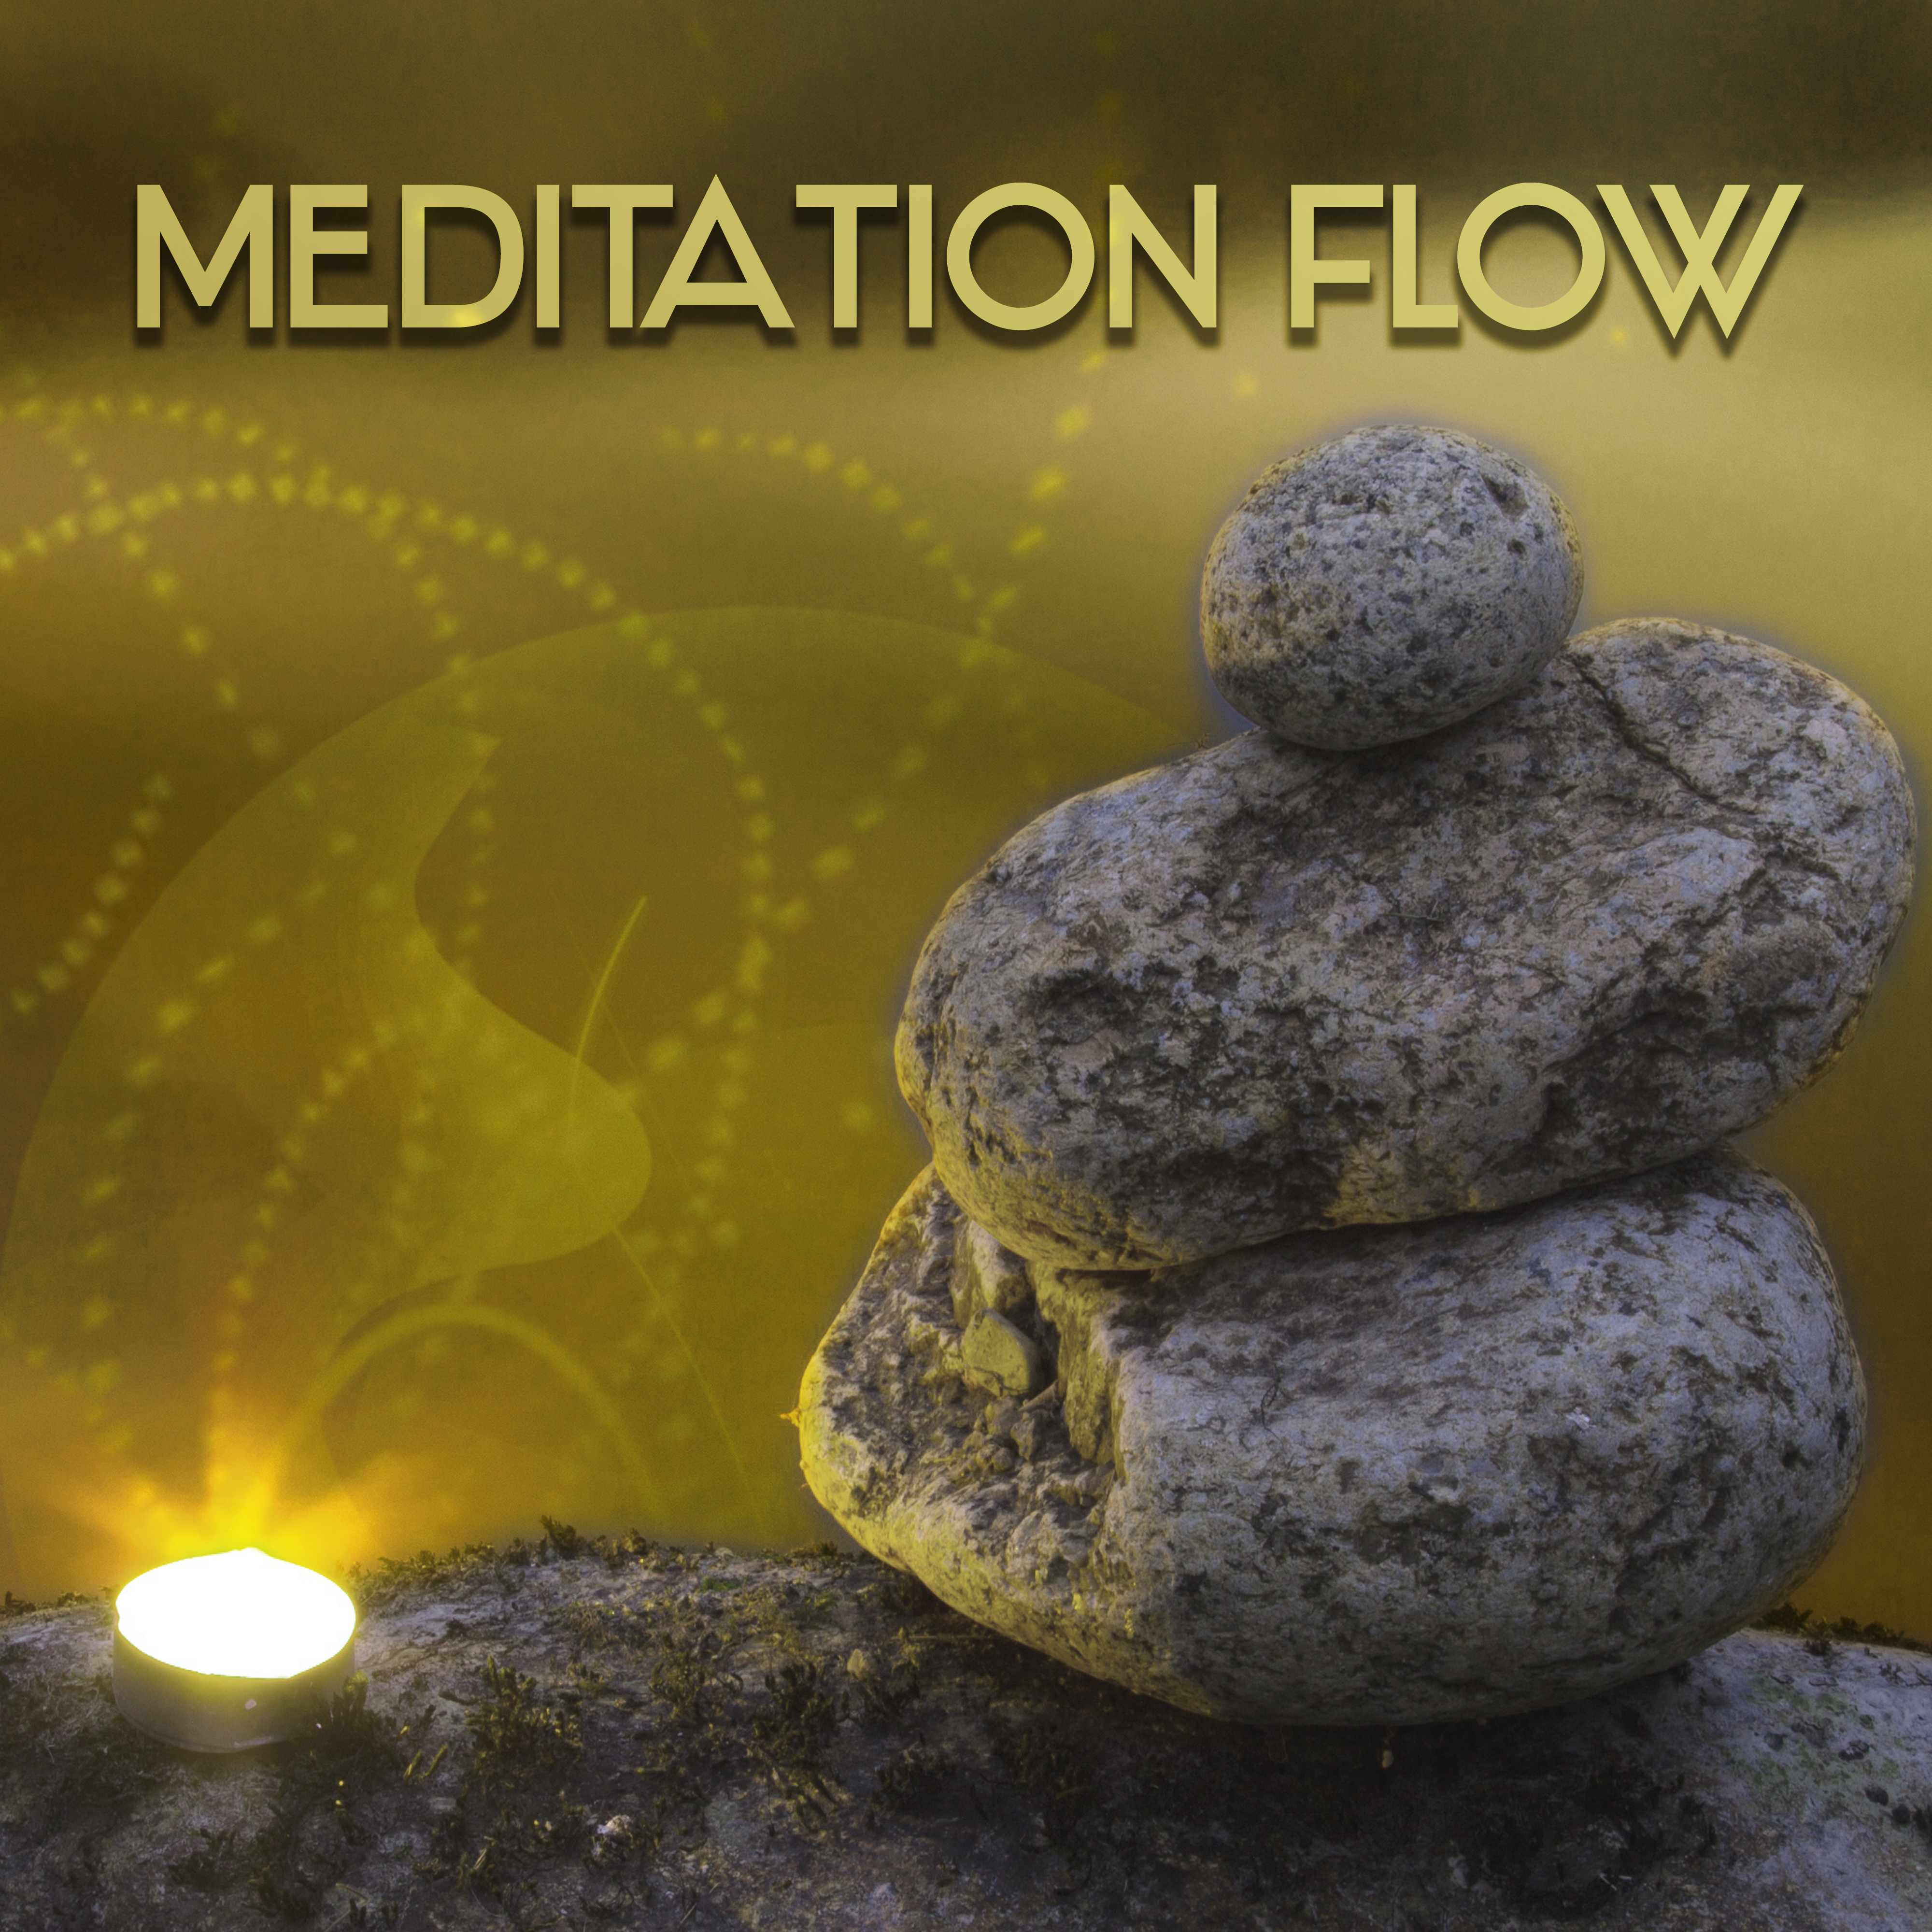 Meditation Flow – New Age Music for Yoga, Meditation, Mindfulness Training, Helpful for Deep Contemplation